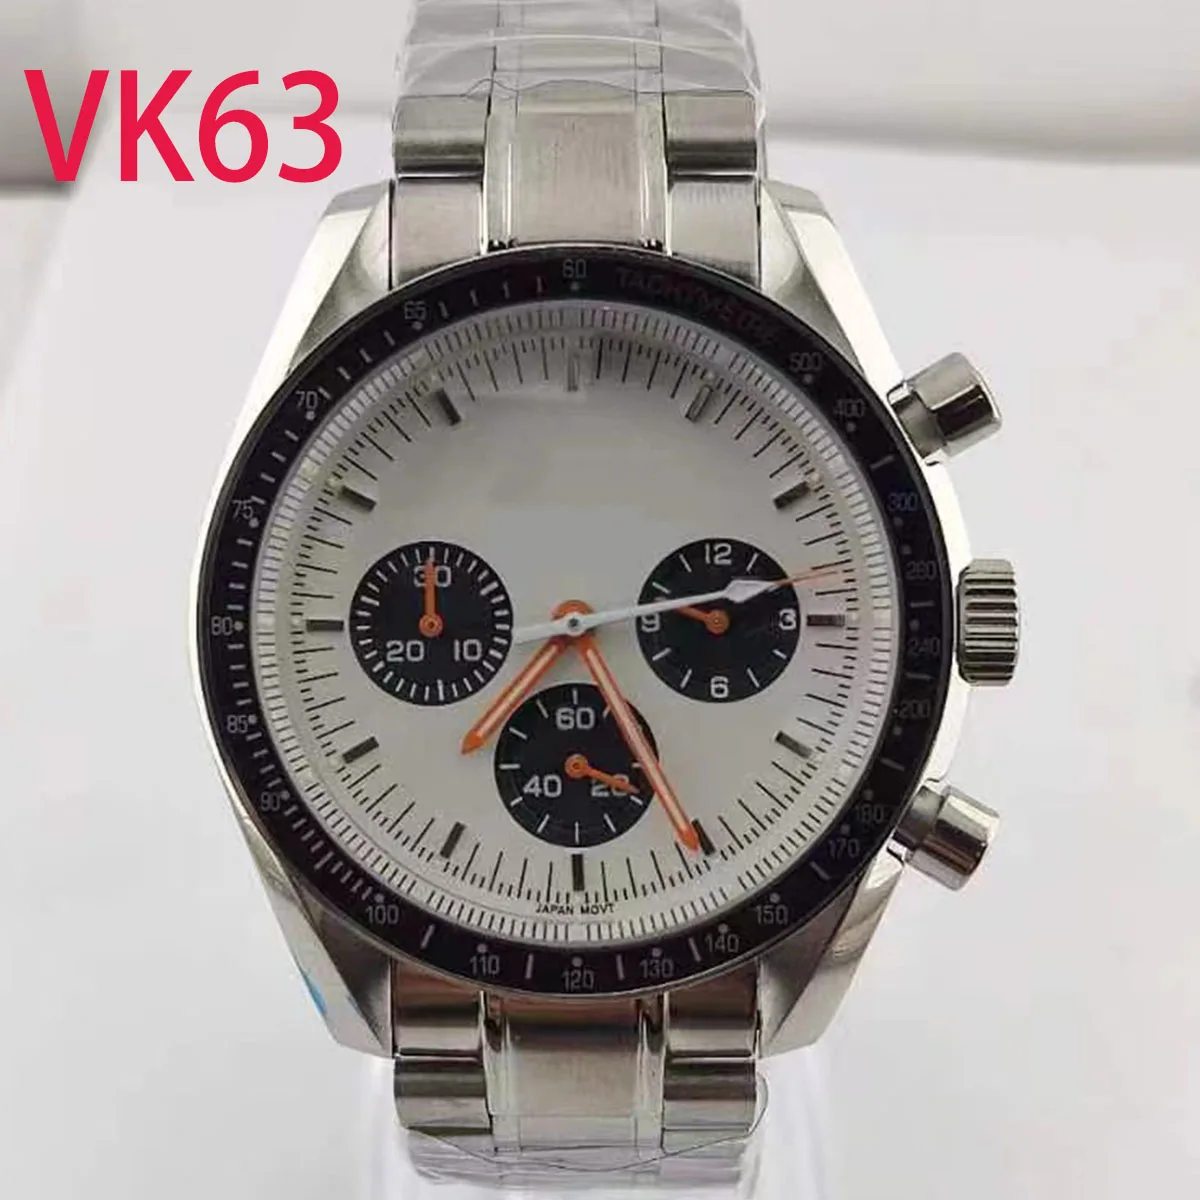 

VK63 40mm Case Men's Watch New Quartz Watch Mineral Glass 40mm Stainless Steel Case VK63 Movement